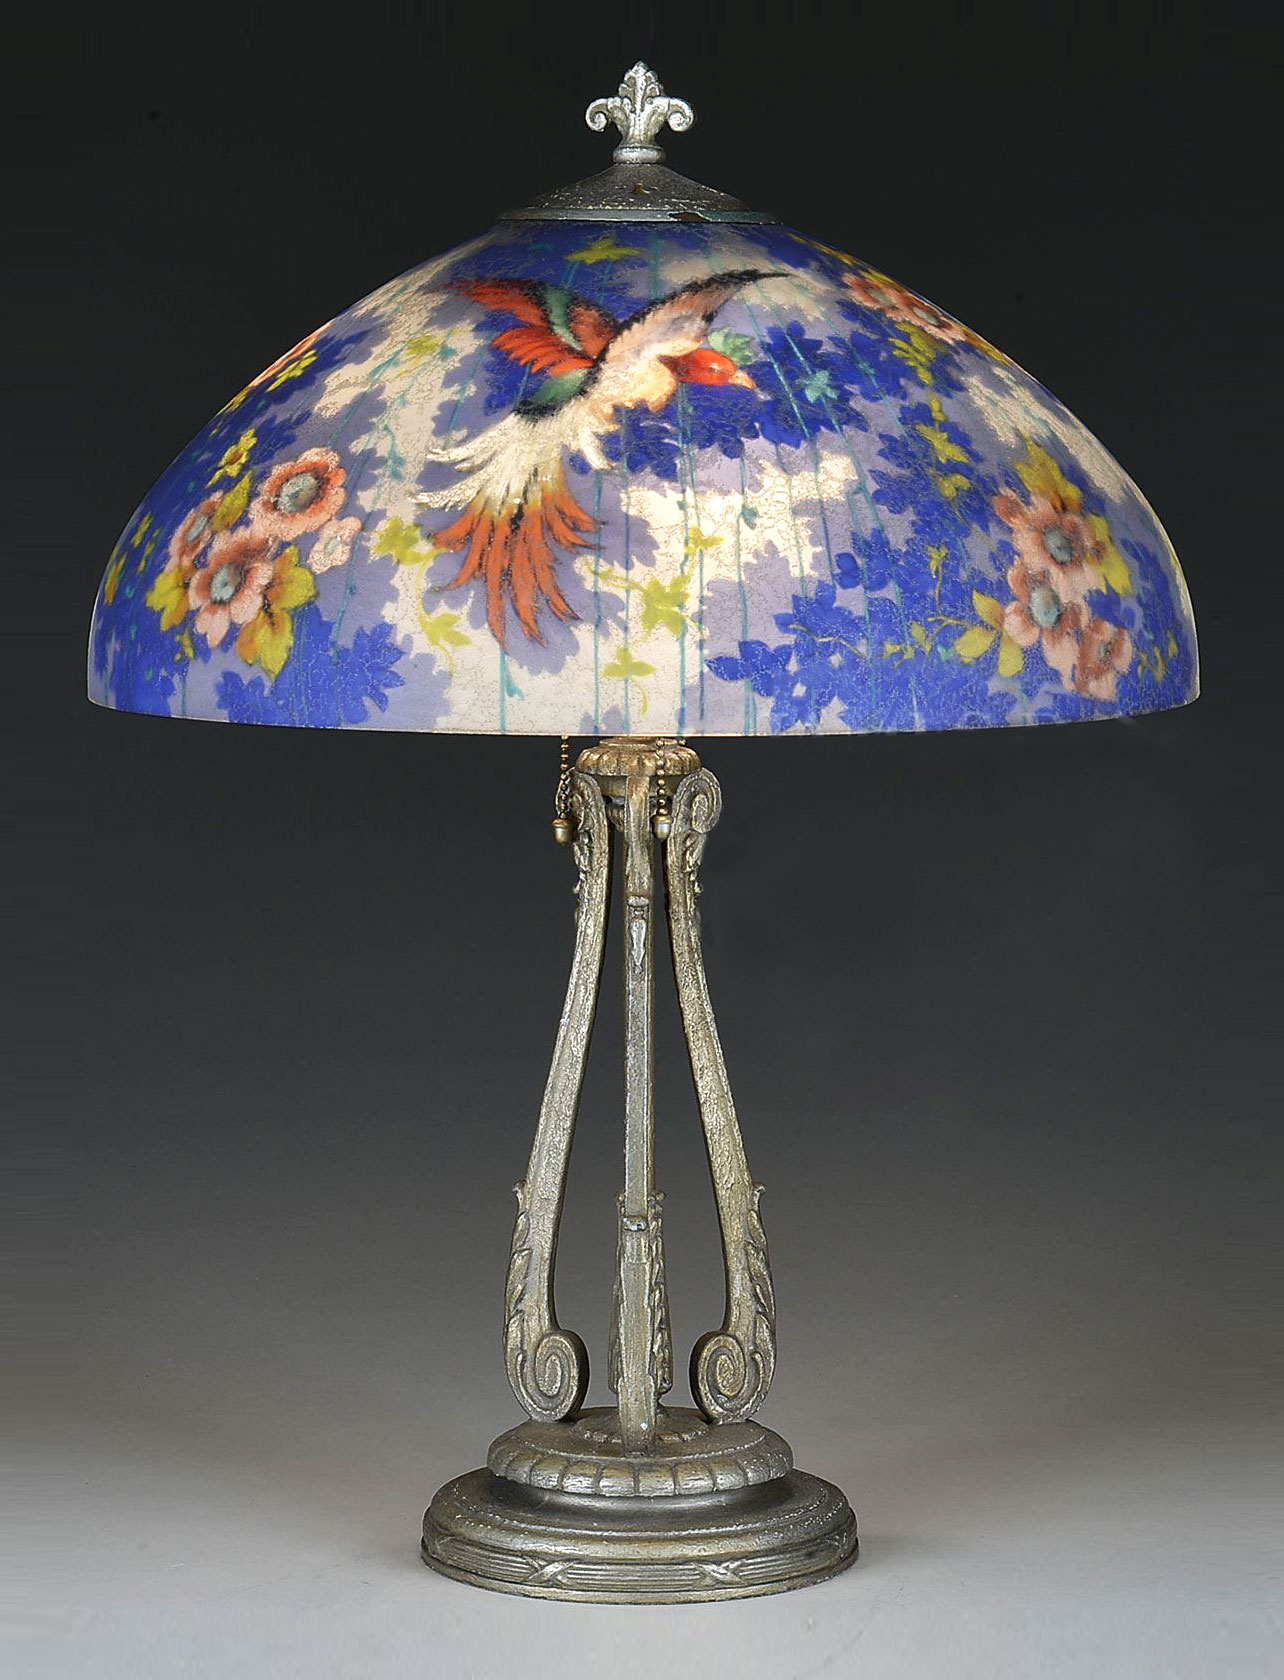 Handel, Blue bird lamp